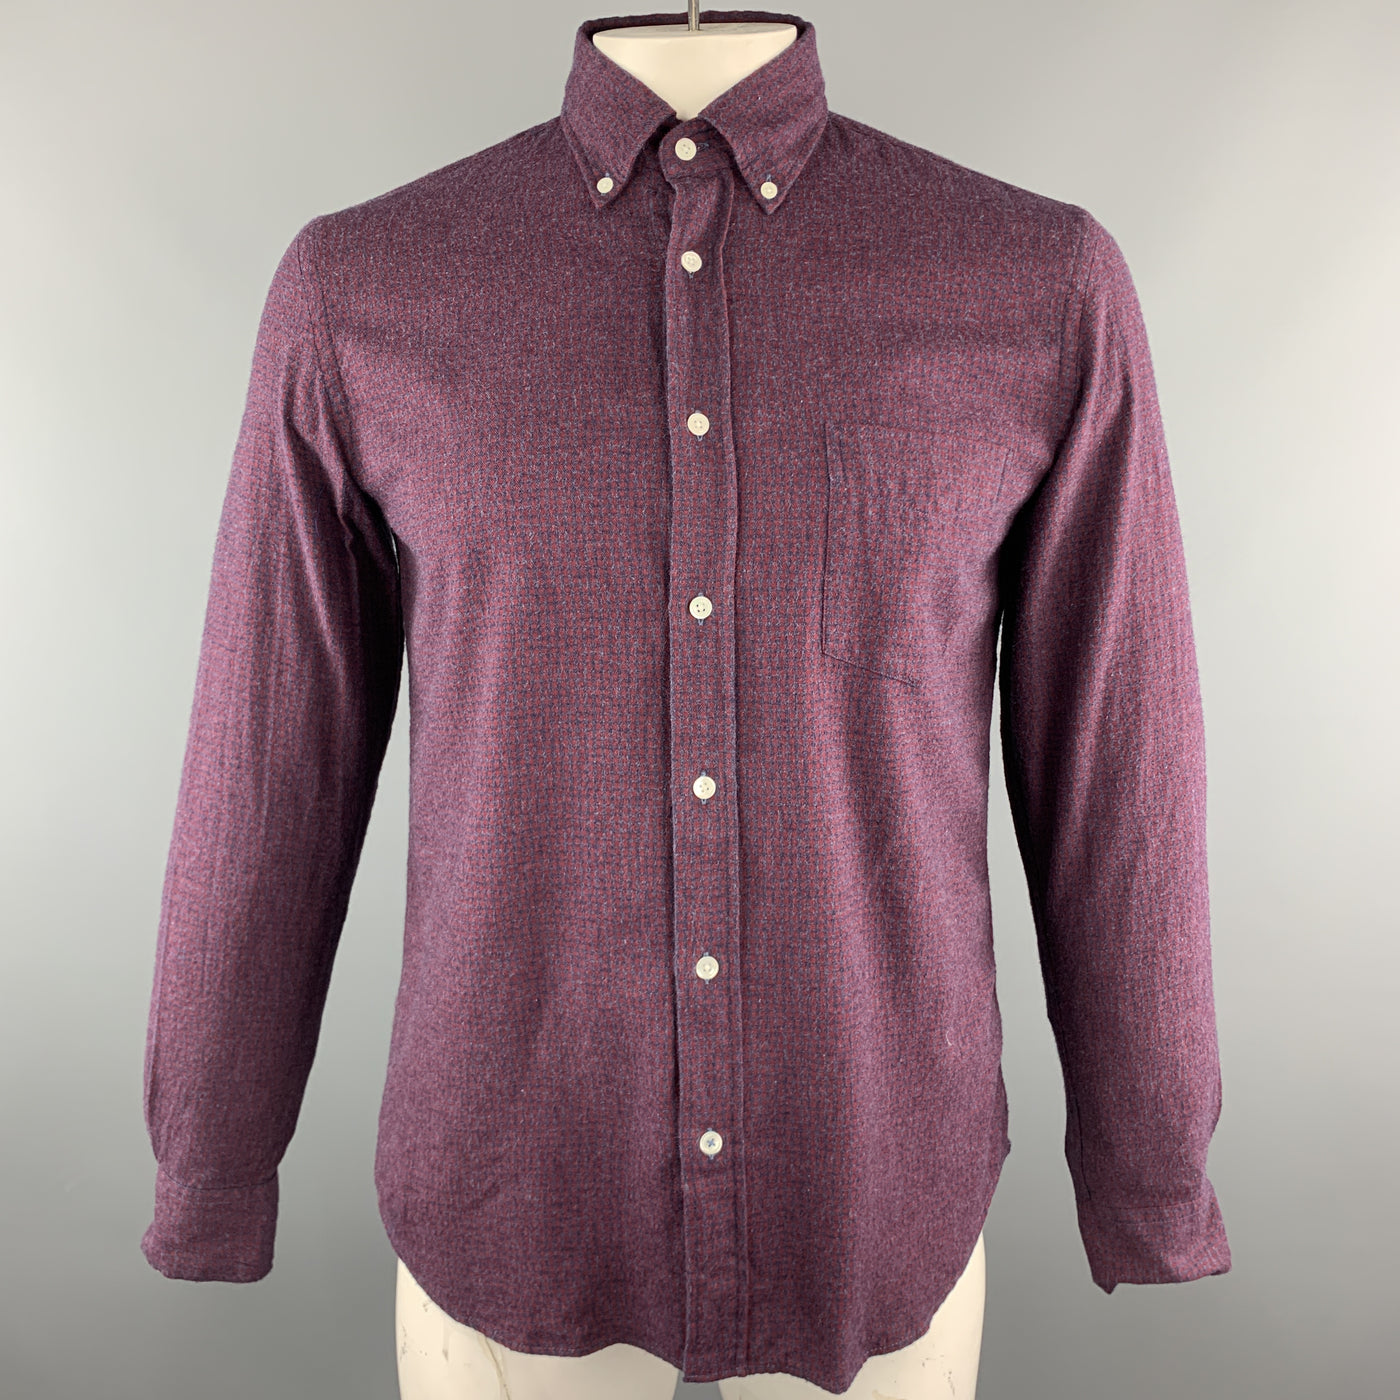 HARTFORD Size L Burgundy & Navy Plaid Cotton Button Up Long Sleeve Shirt